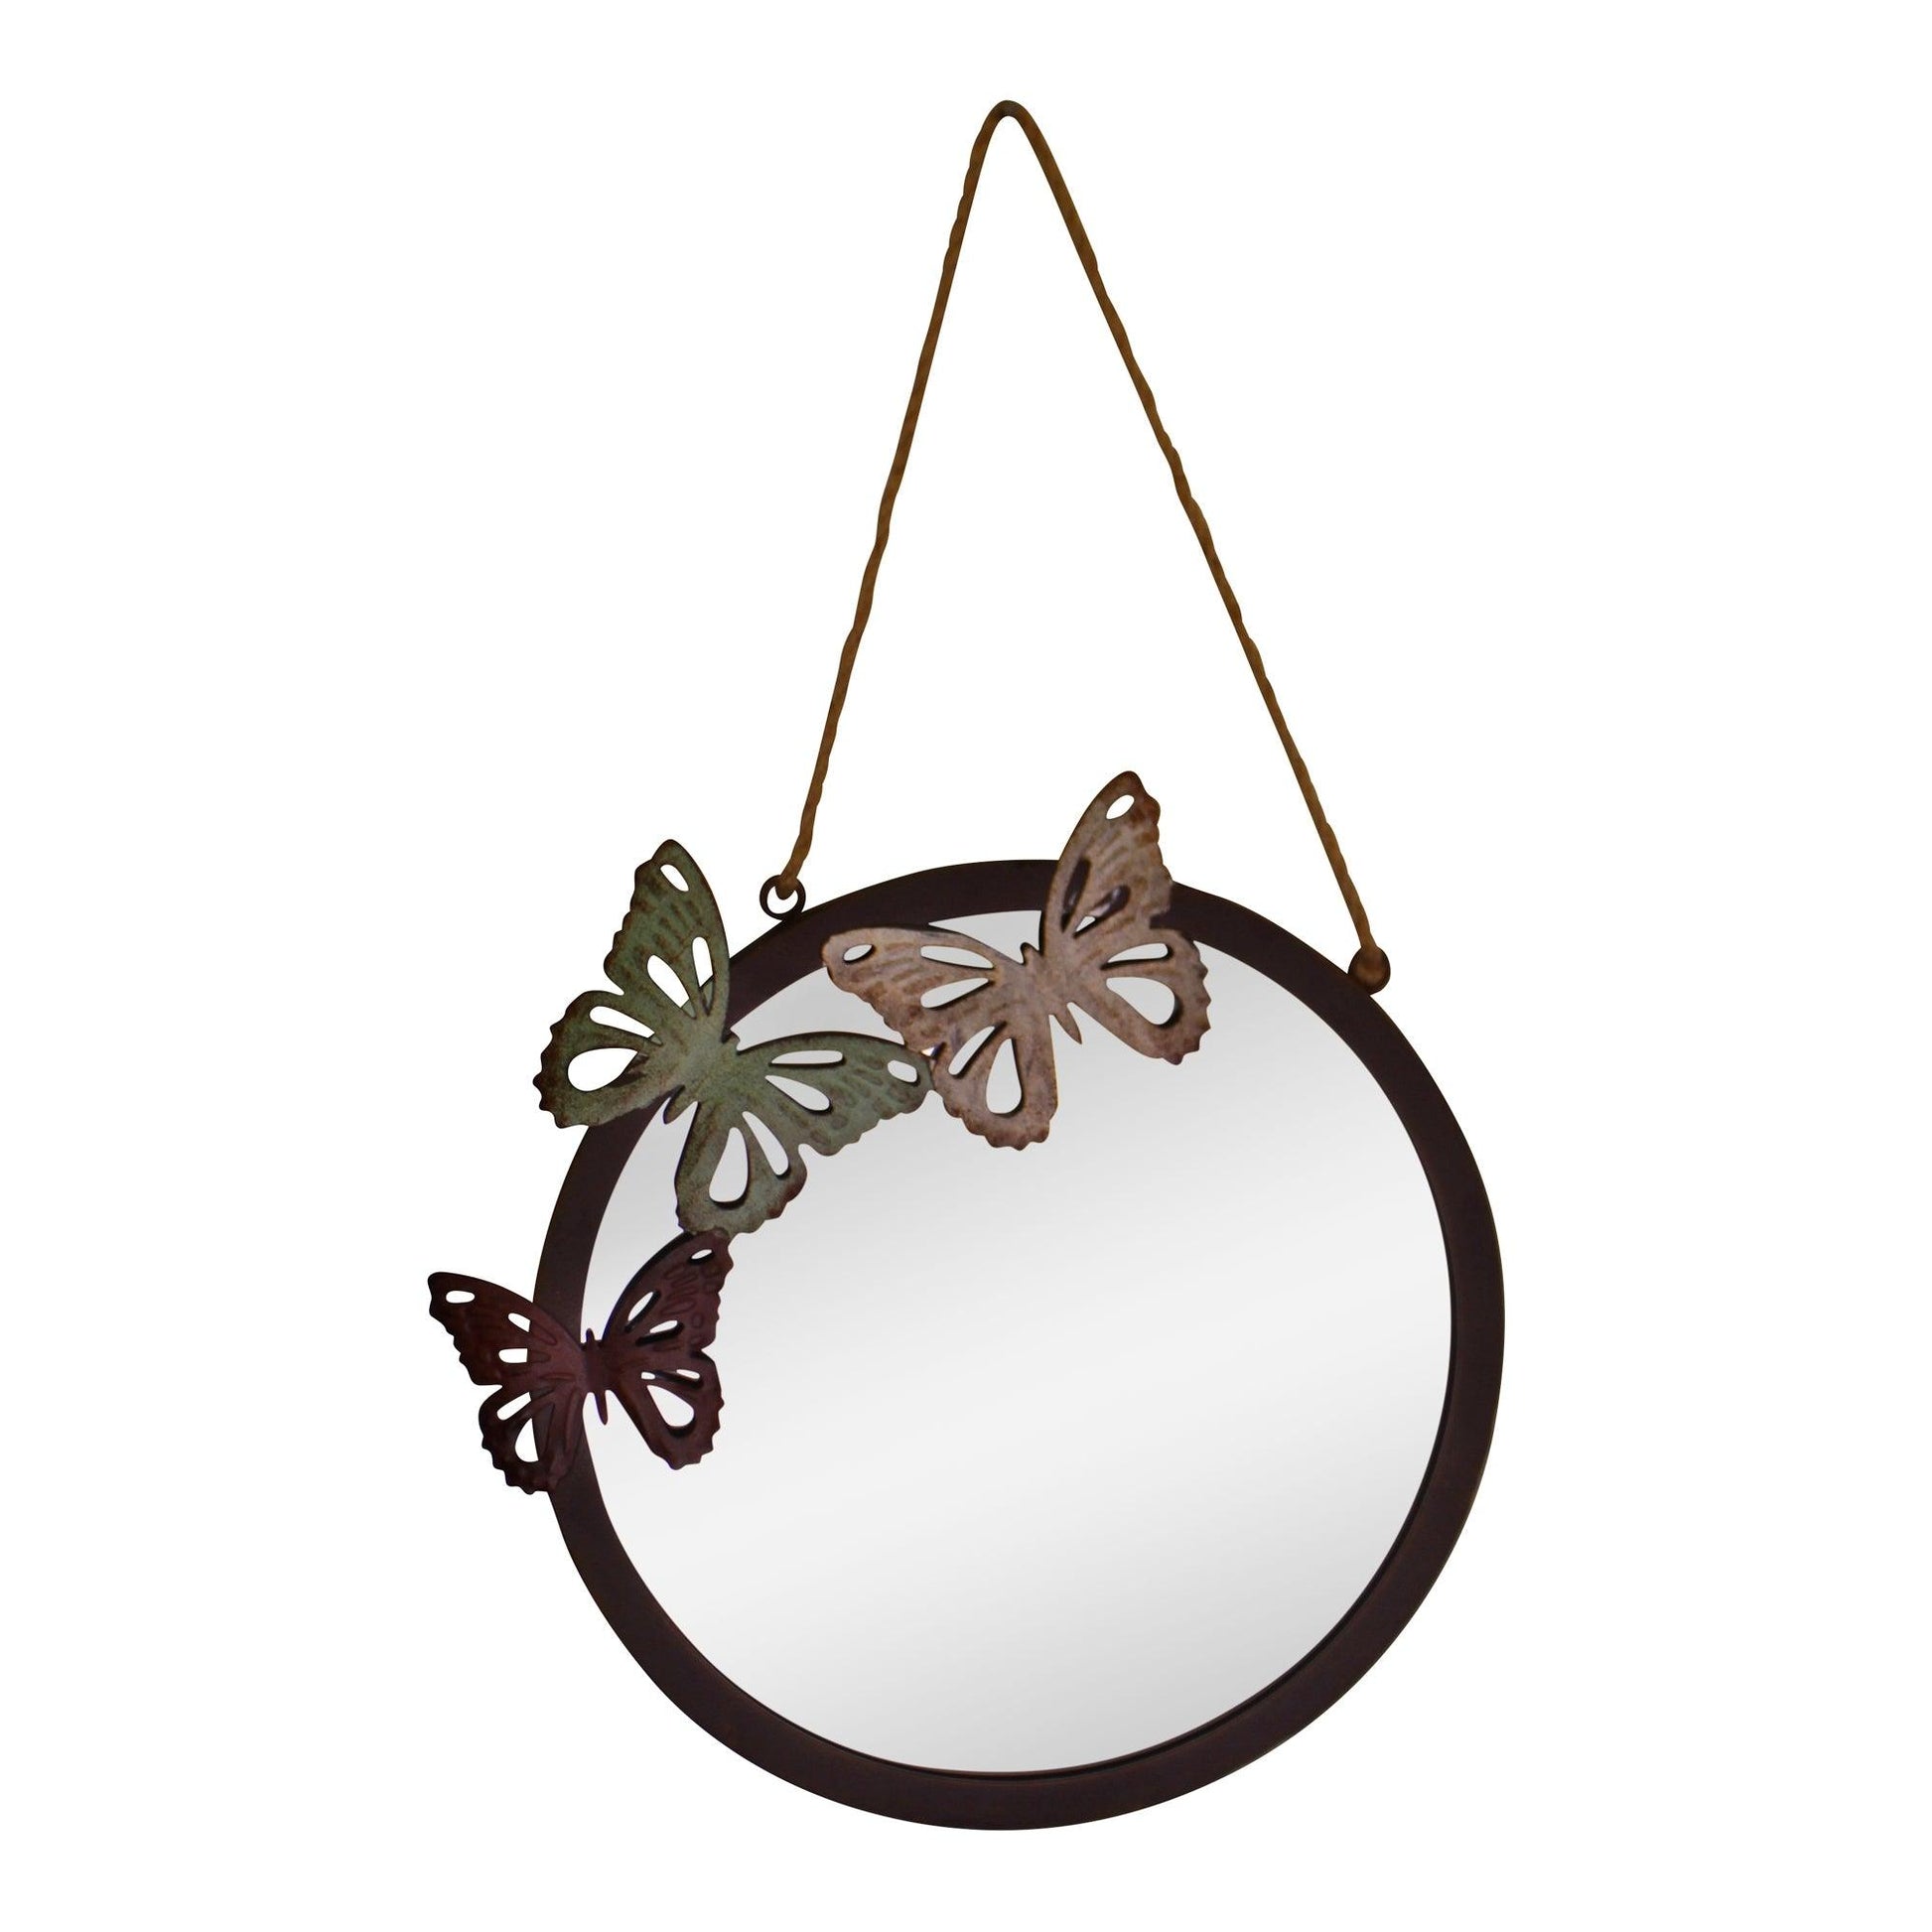 Circular Garden Mirror, Butterfly Design, 33cm - Home Inspired Gifts